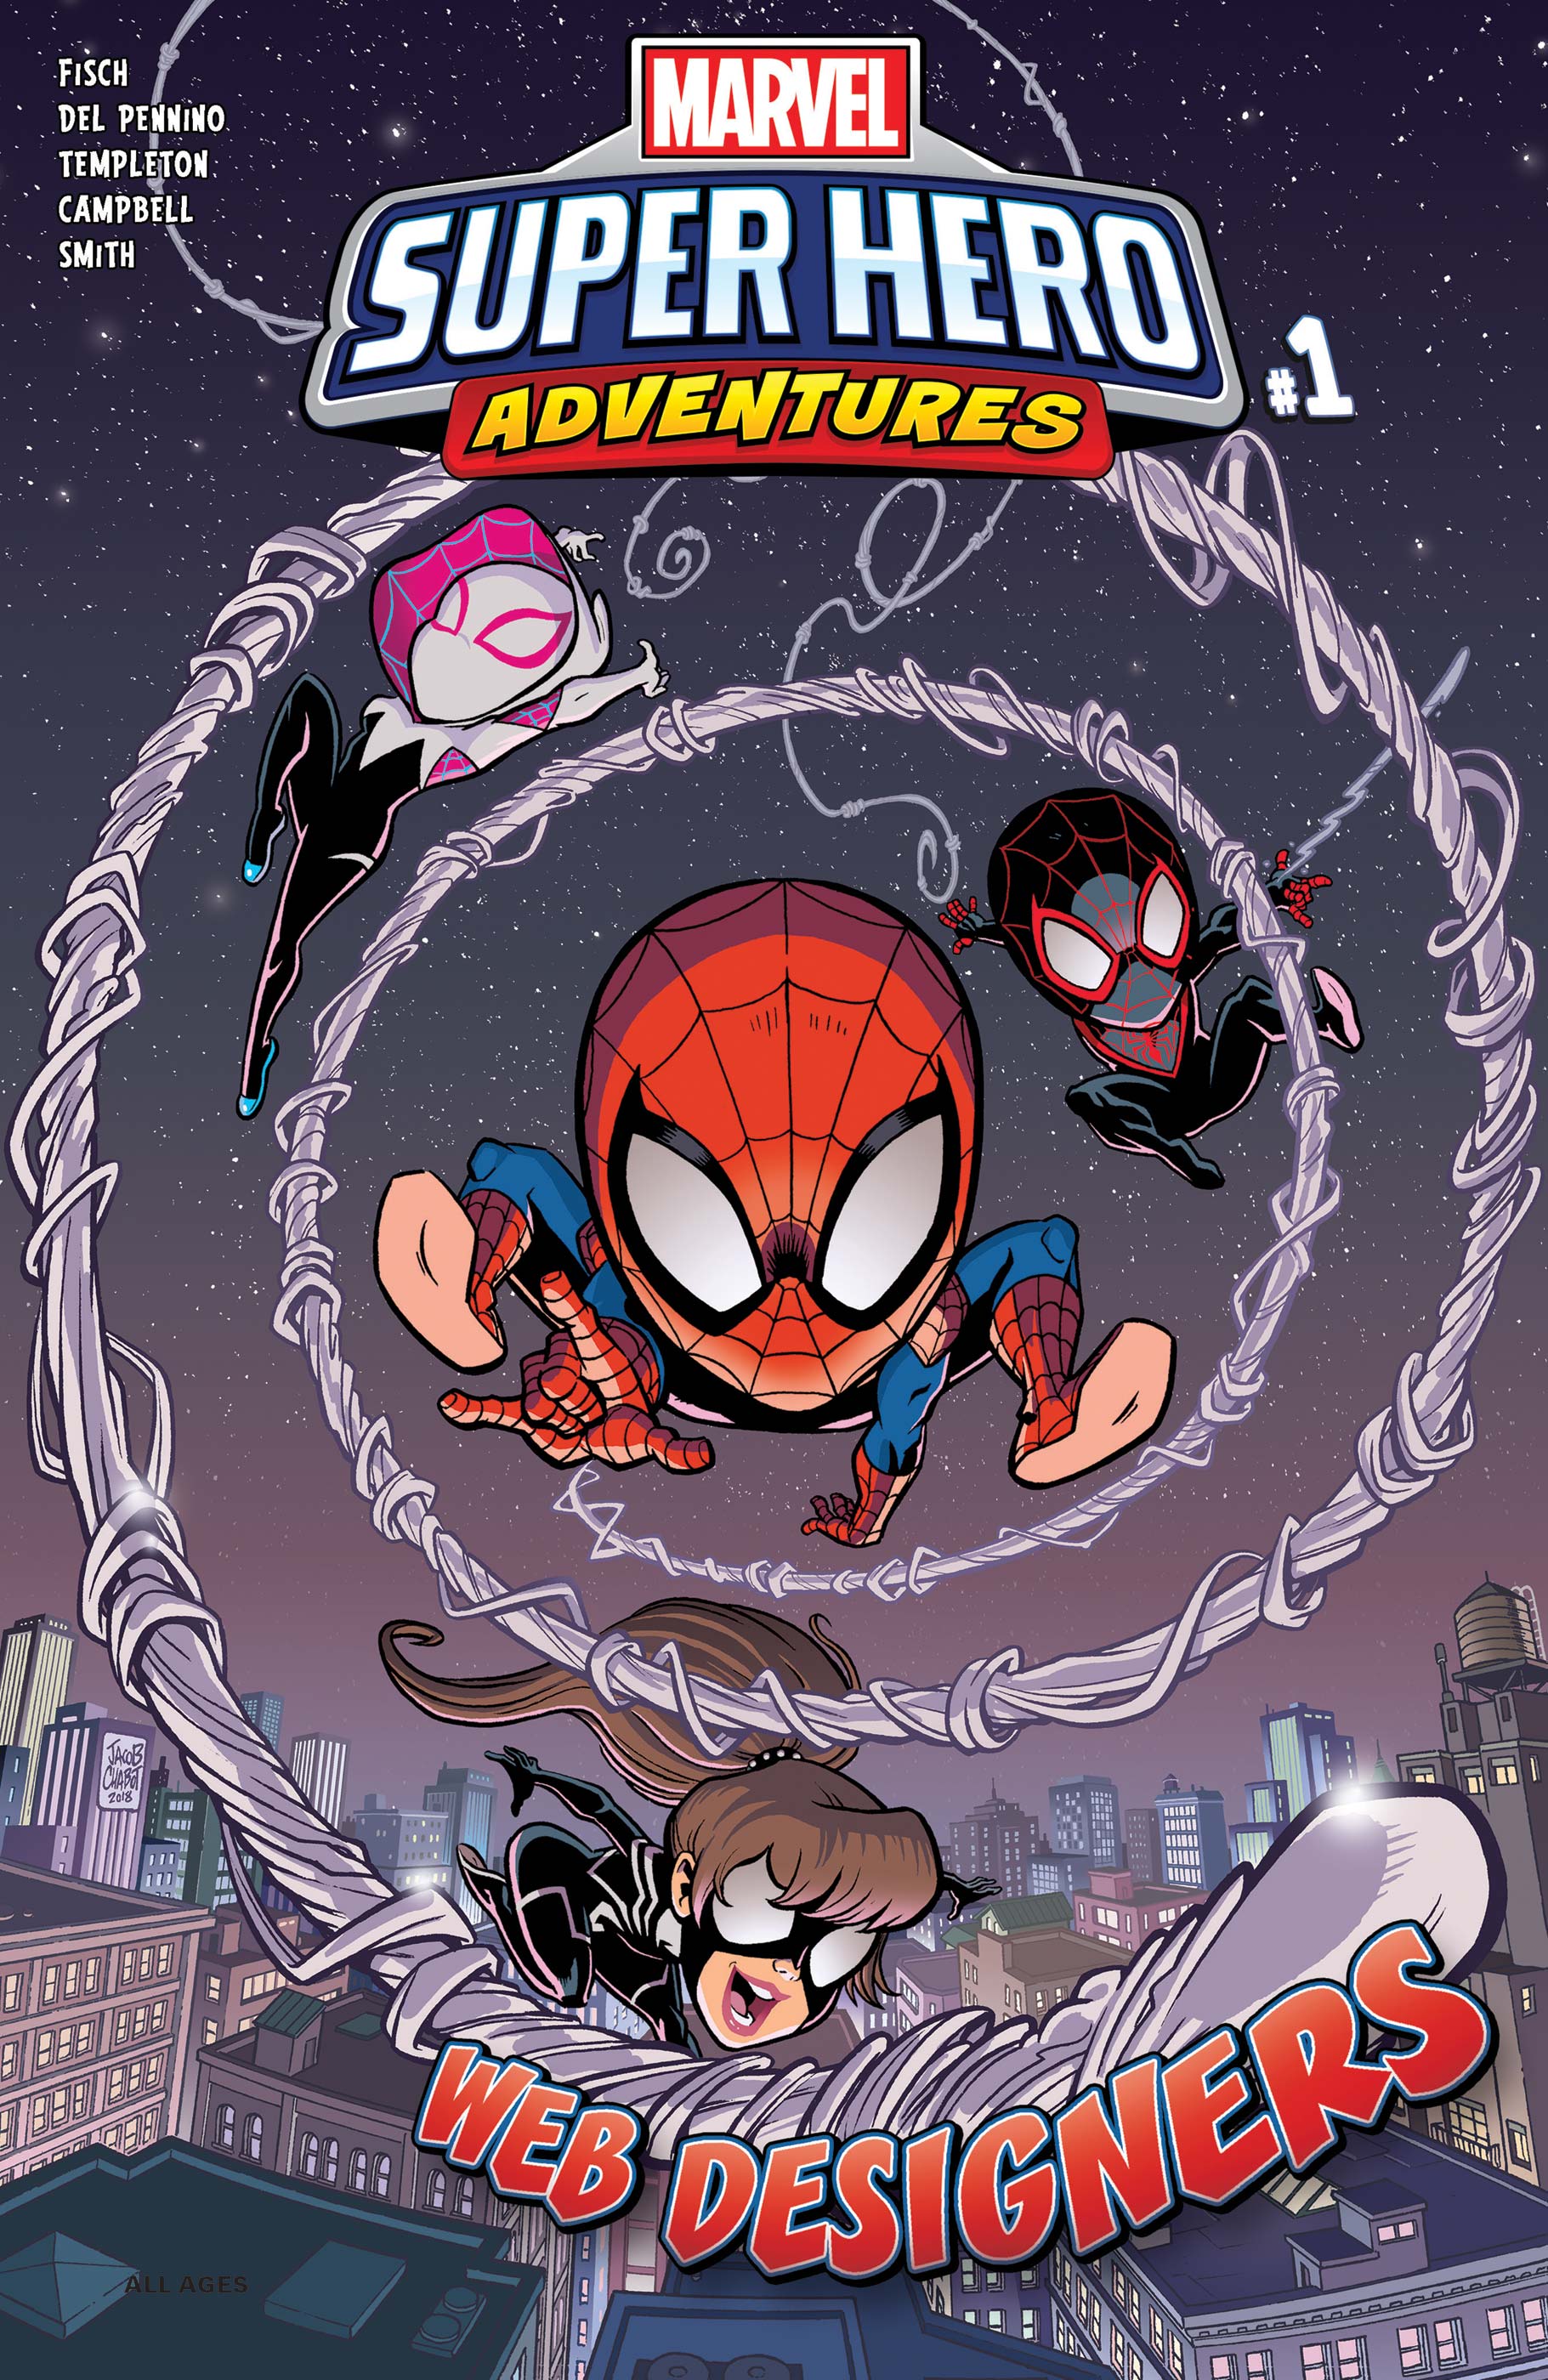 Marvel Super Hero Adventures: Spider-Man - Web Designers (2019) #1